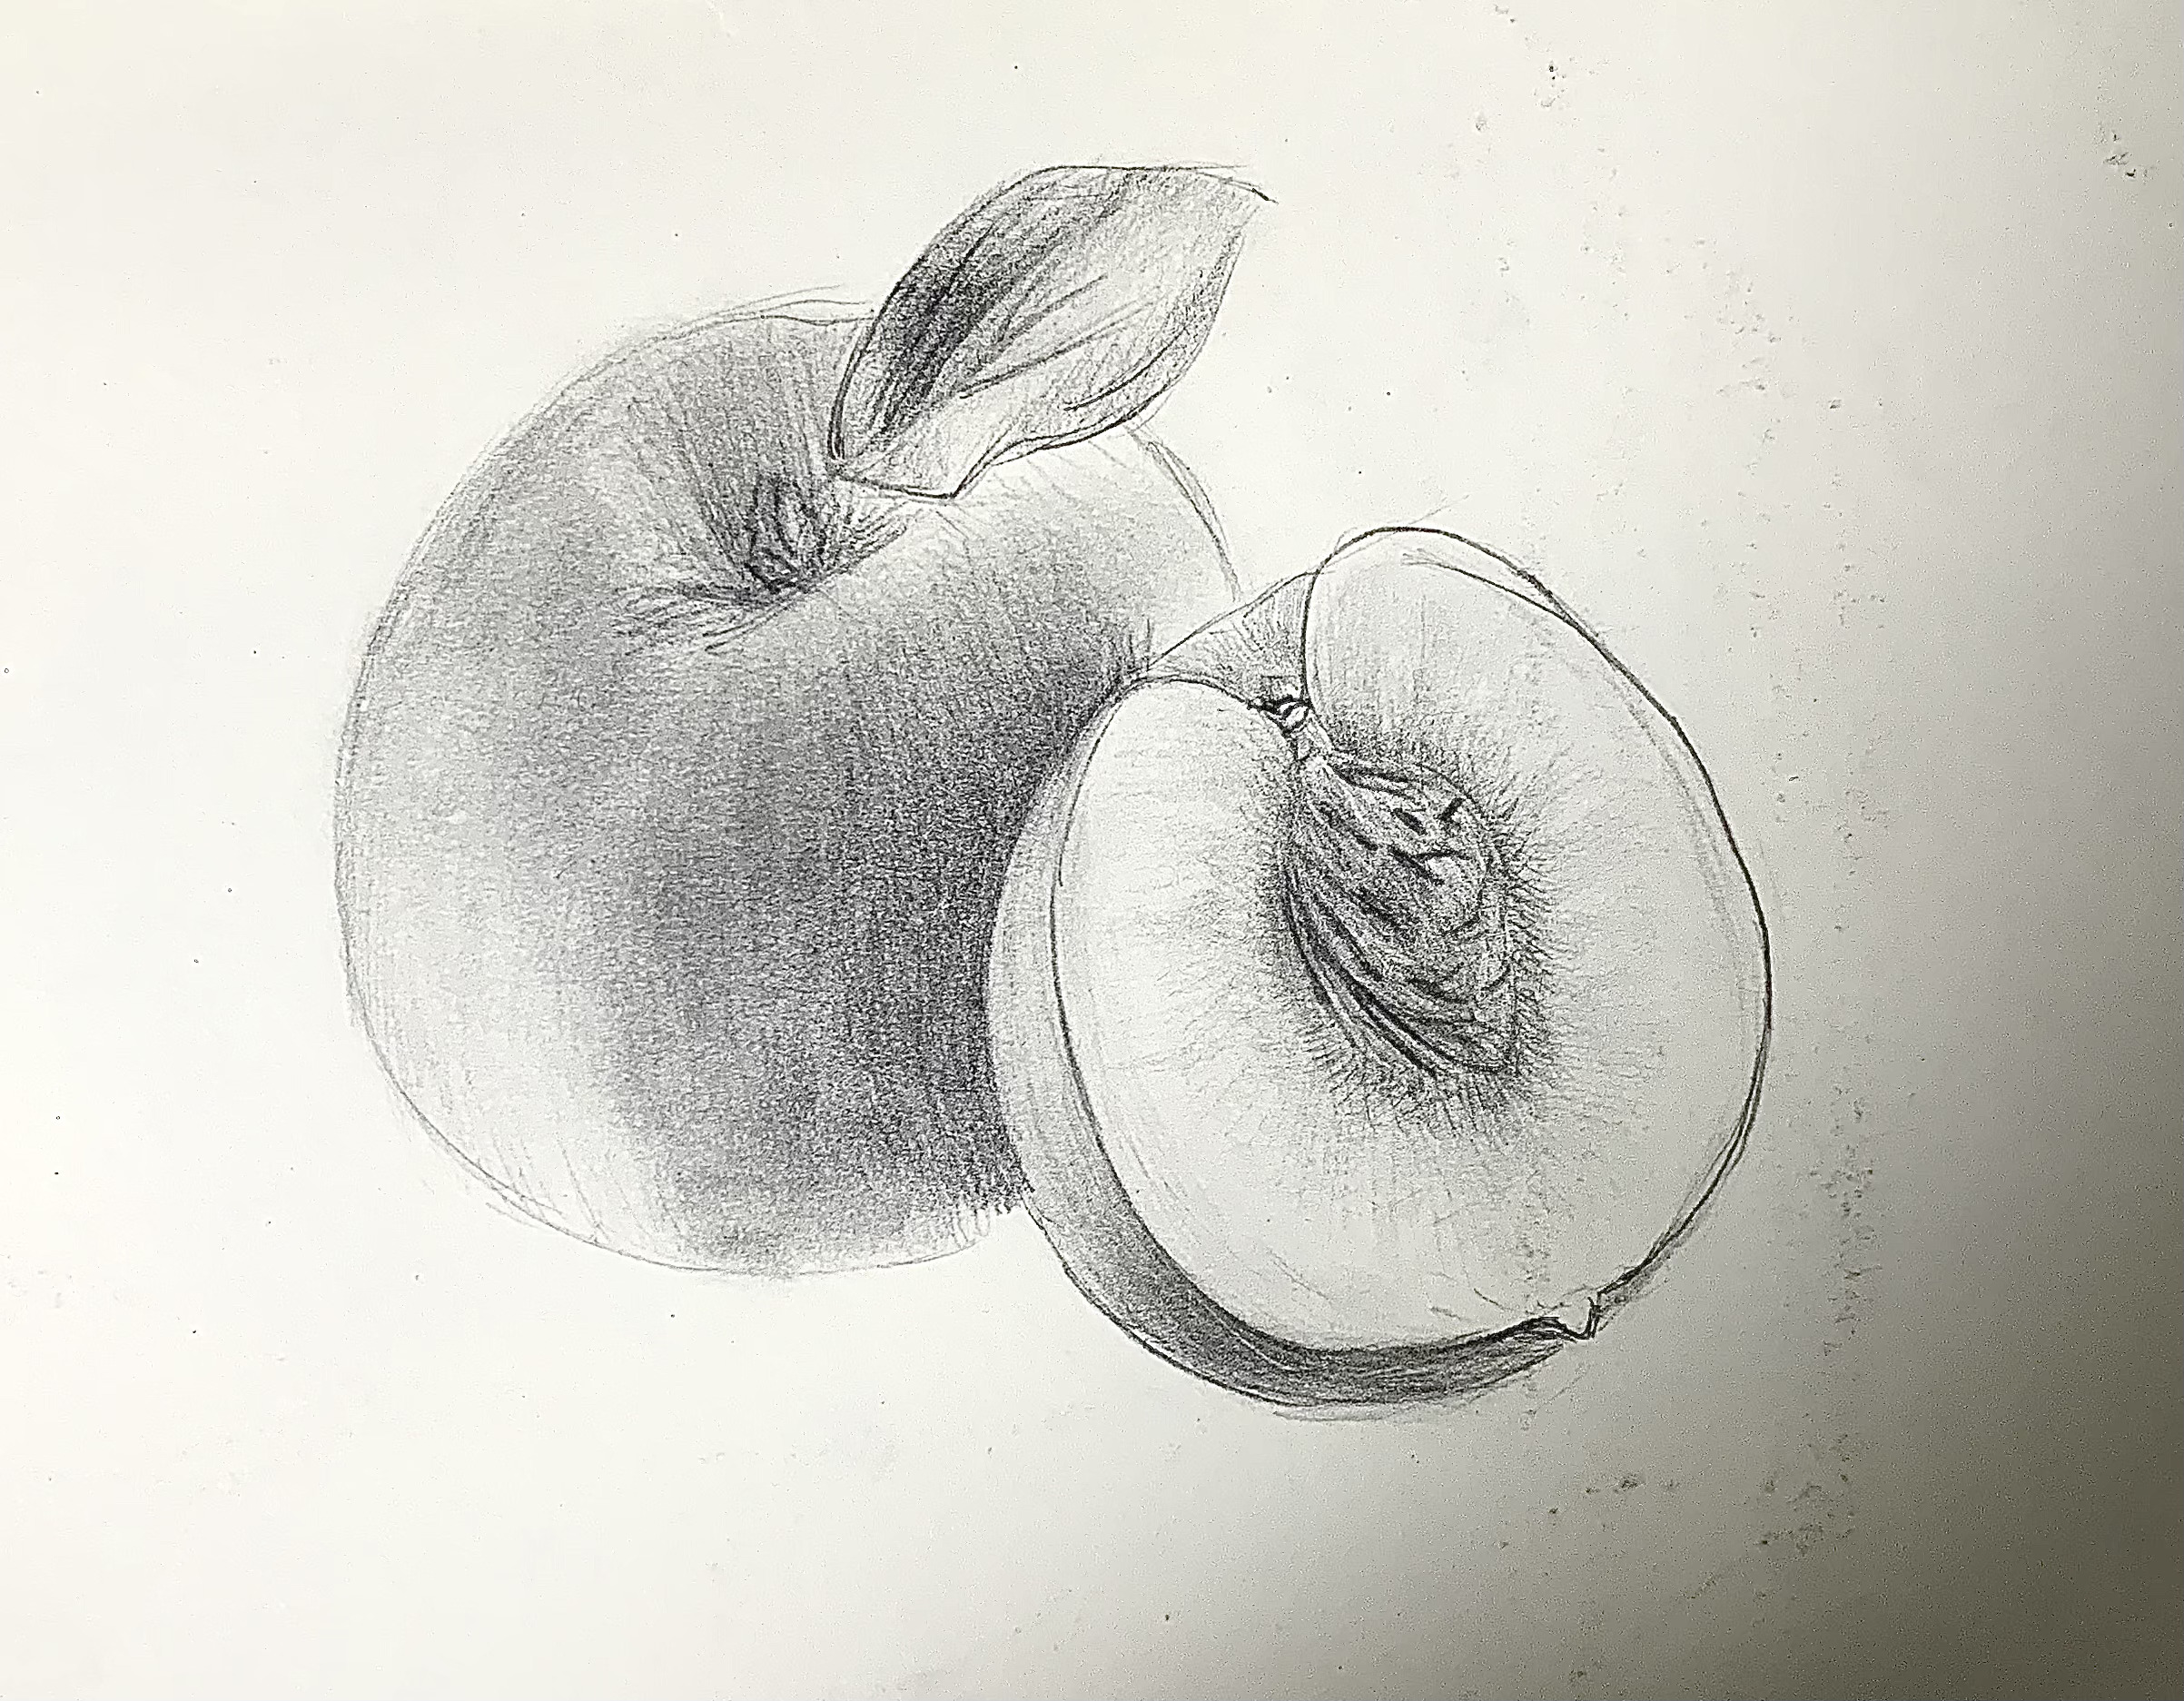 Sketch of a peach